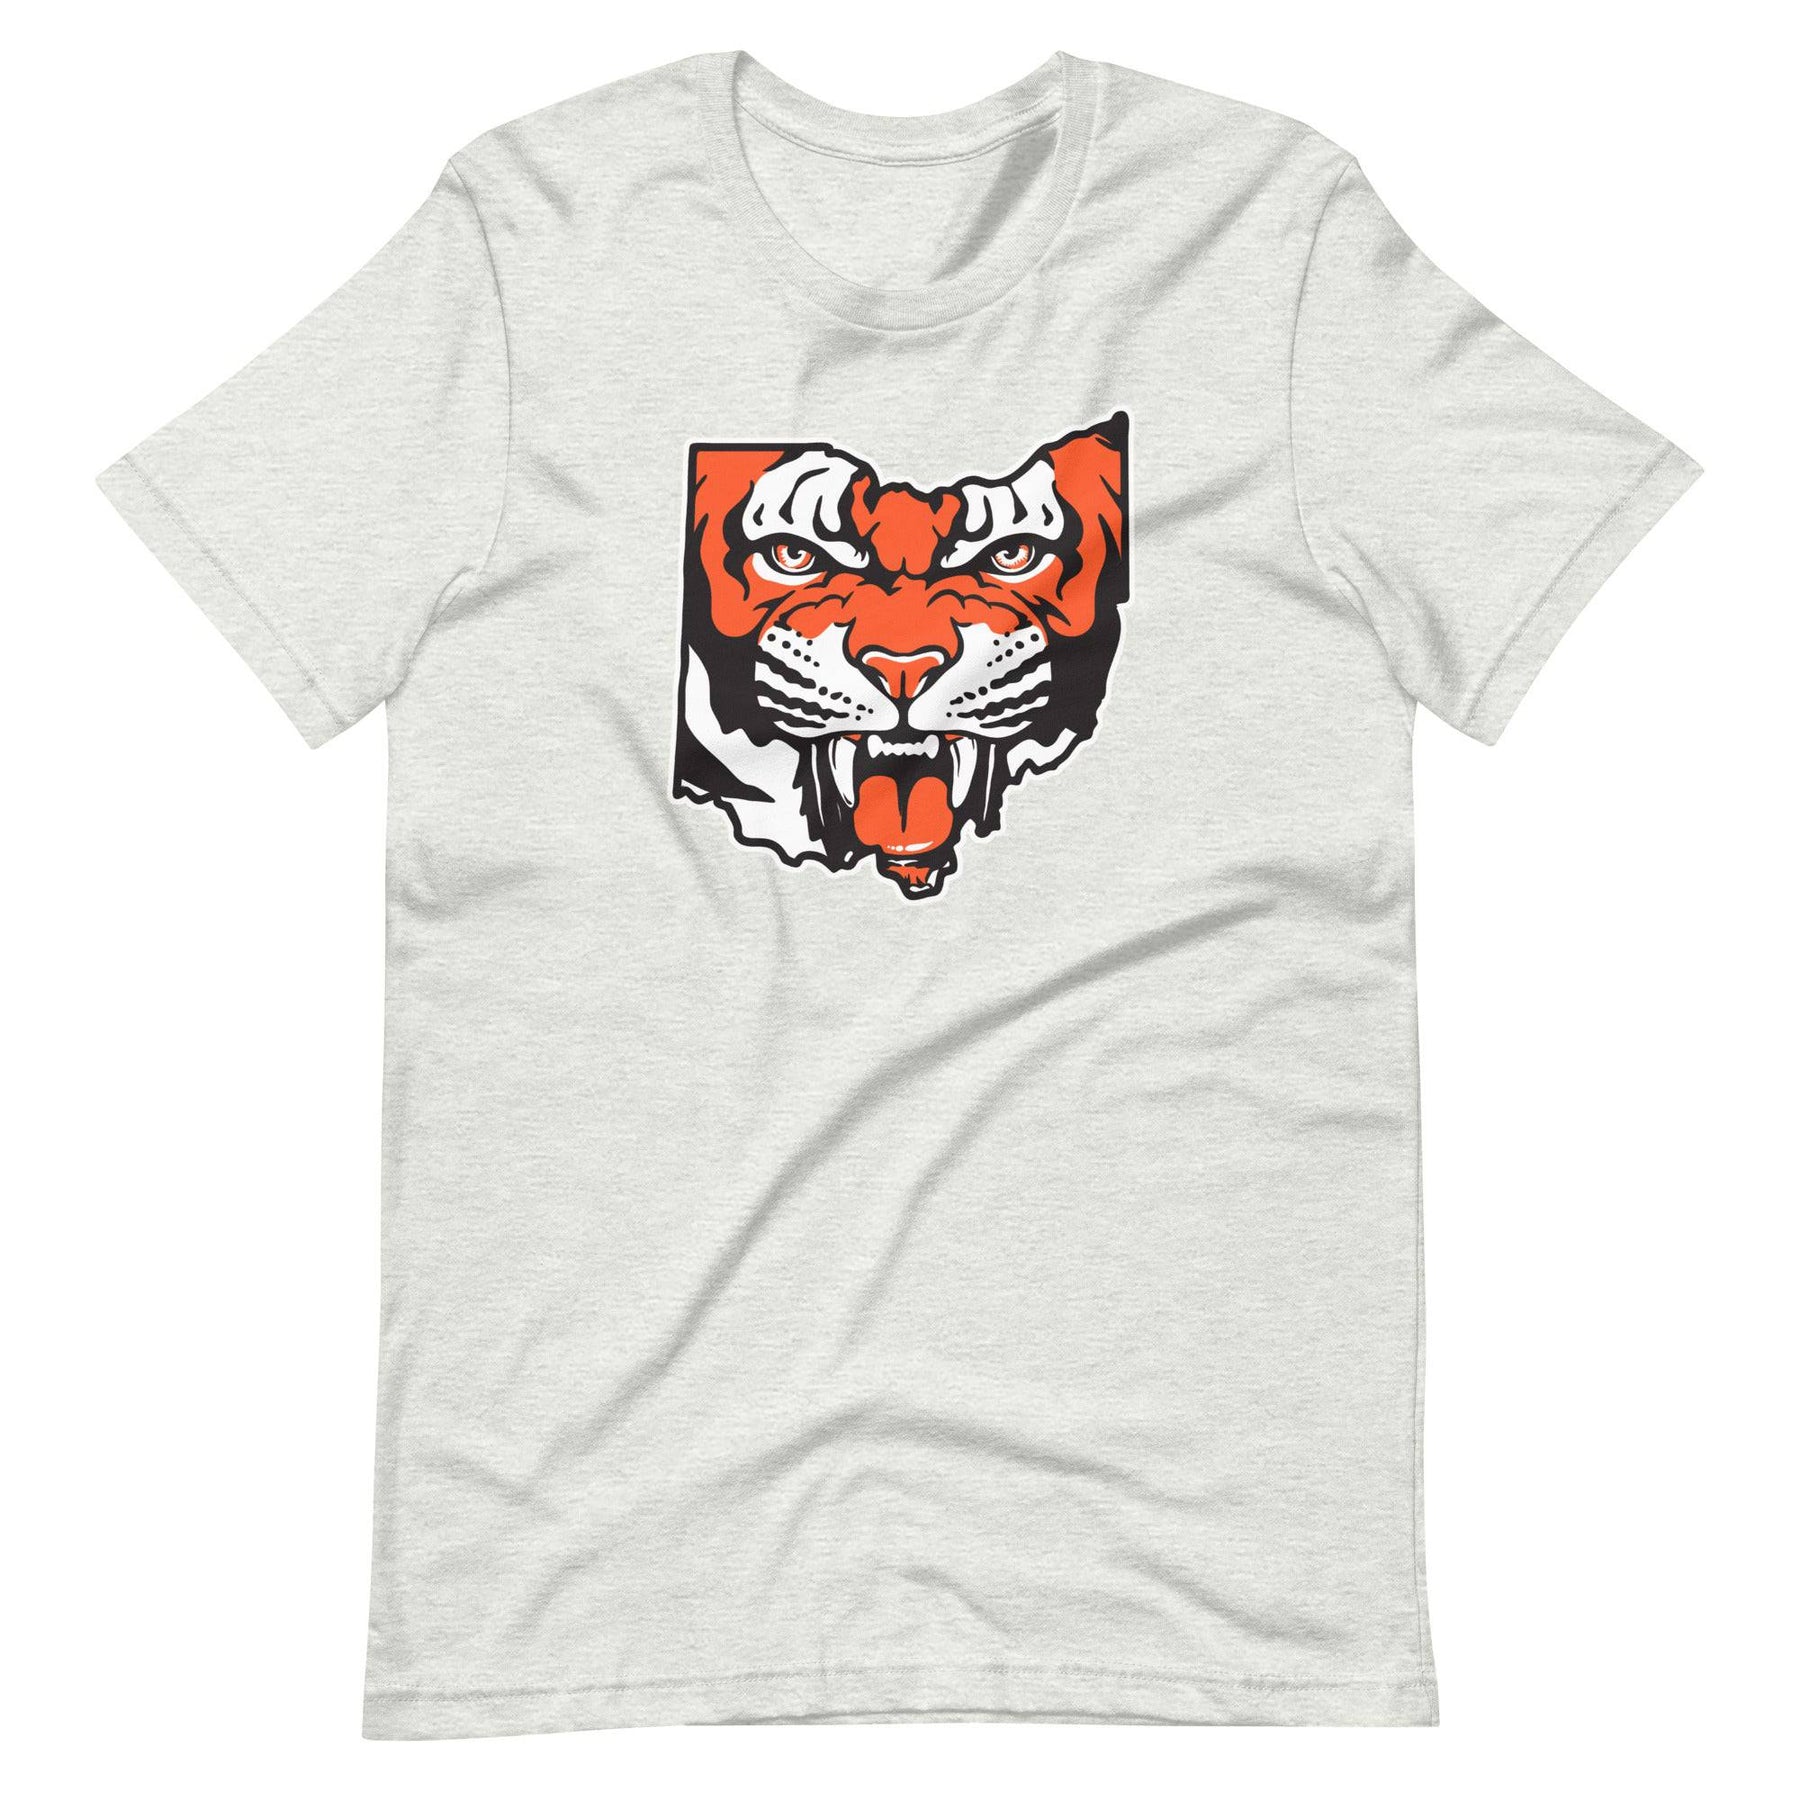 Ohio Bengal - Unisex t-shirt, Shirts & Tops, WeBleedOhio, WeBleedOhio